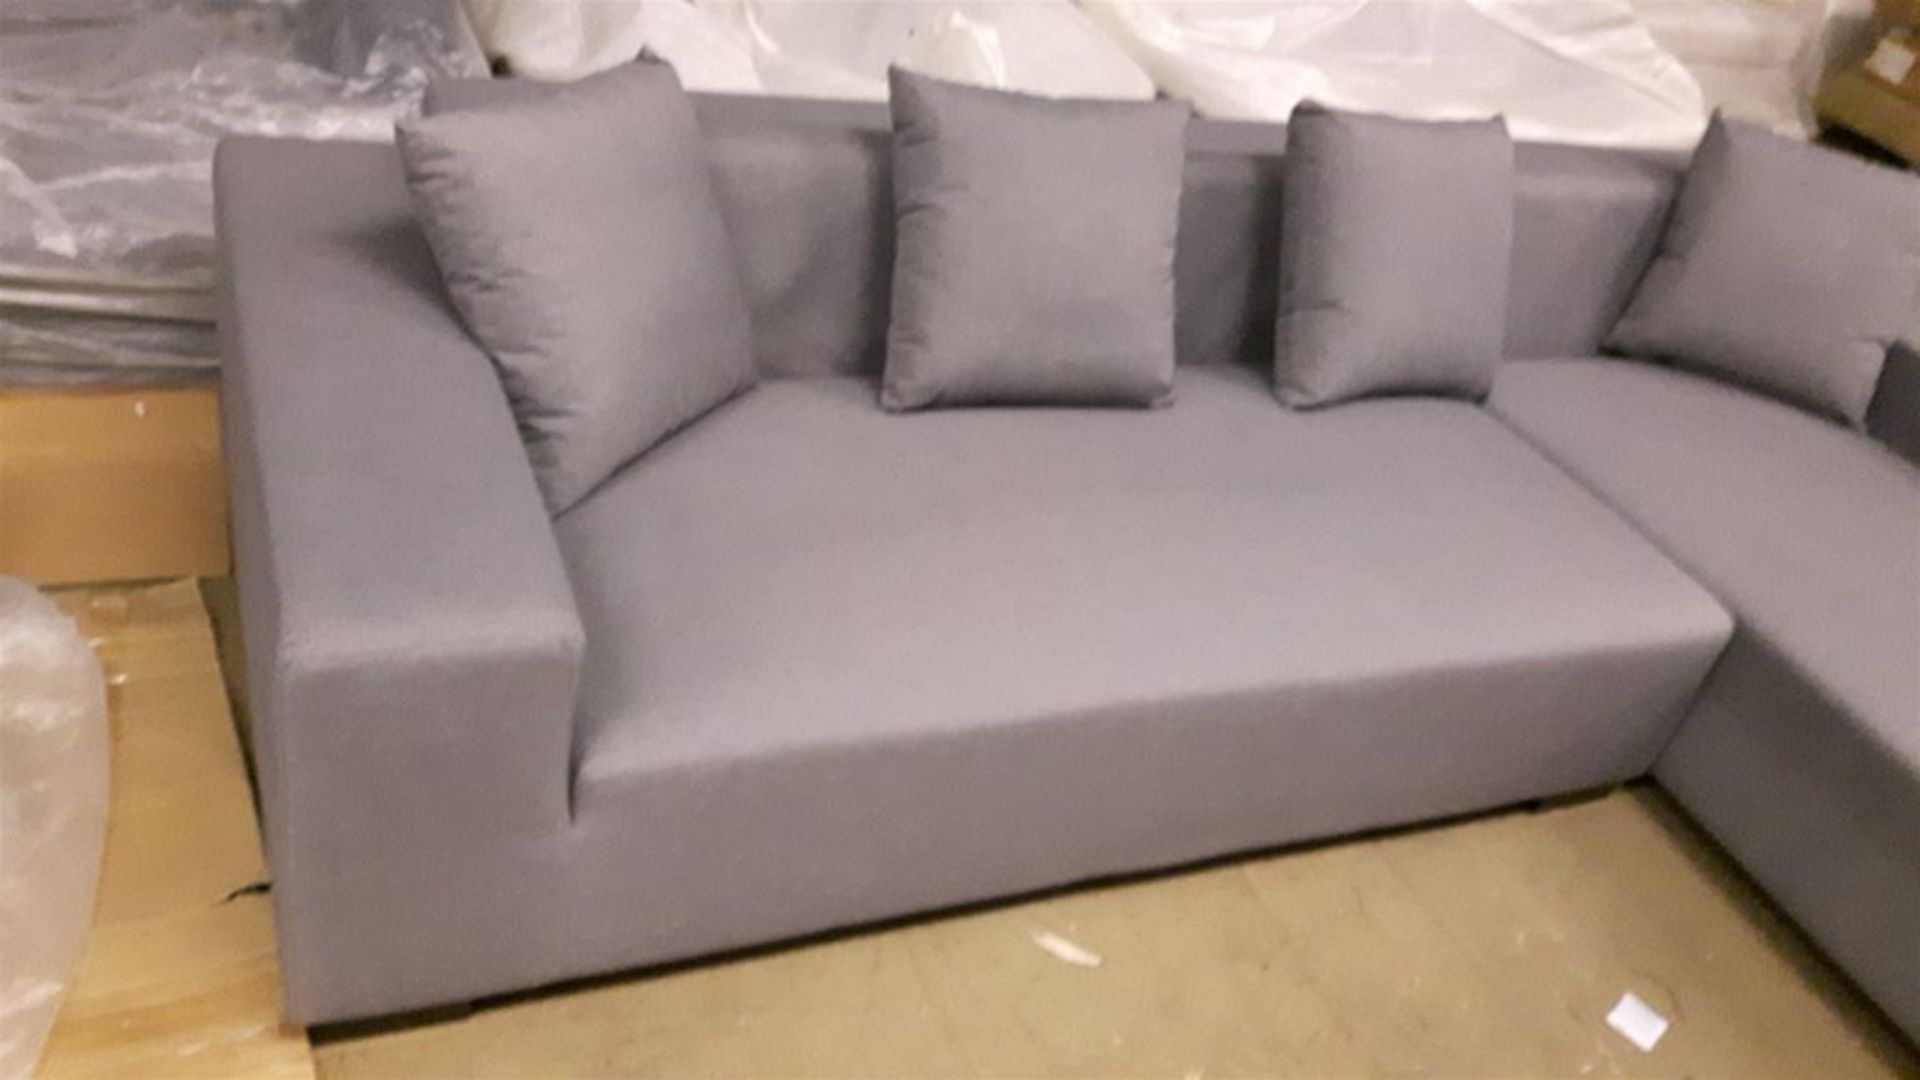 Amhurst Chaise Langue and sofa set. - Image 2 of 4